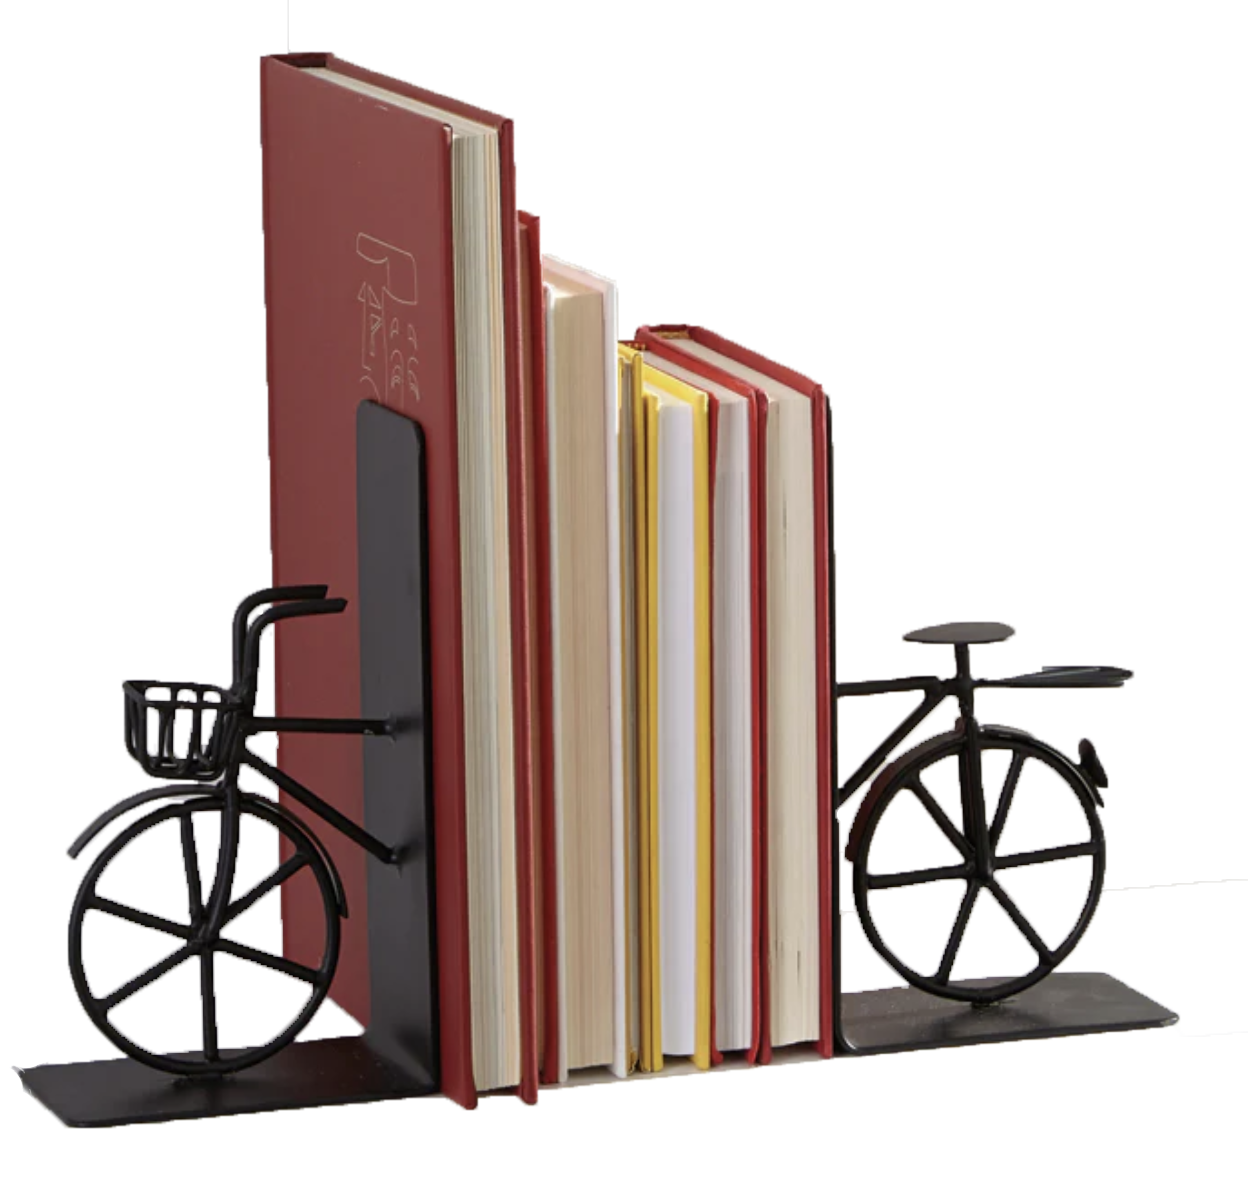 Book ends designed like a bike.